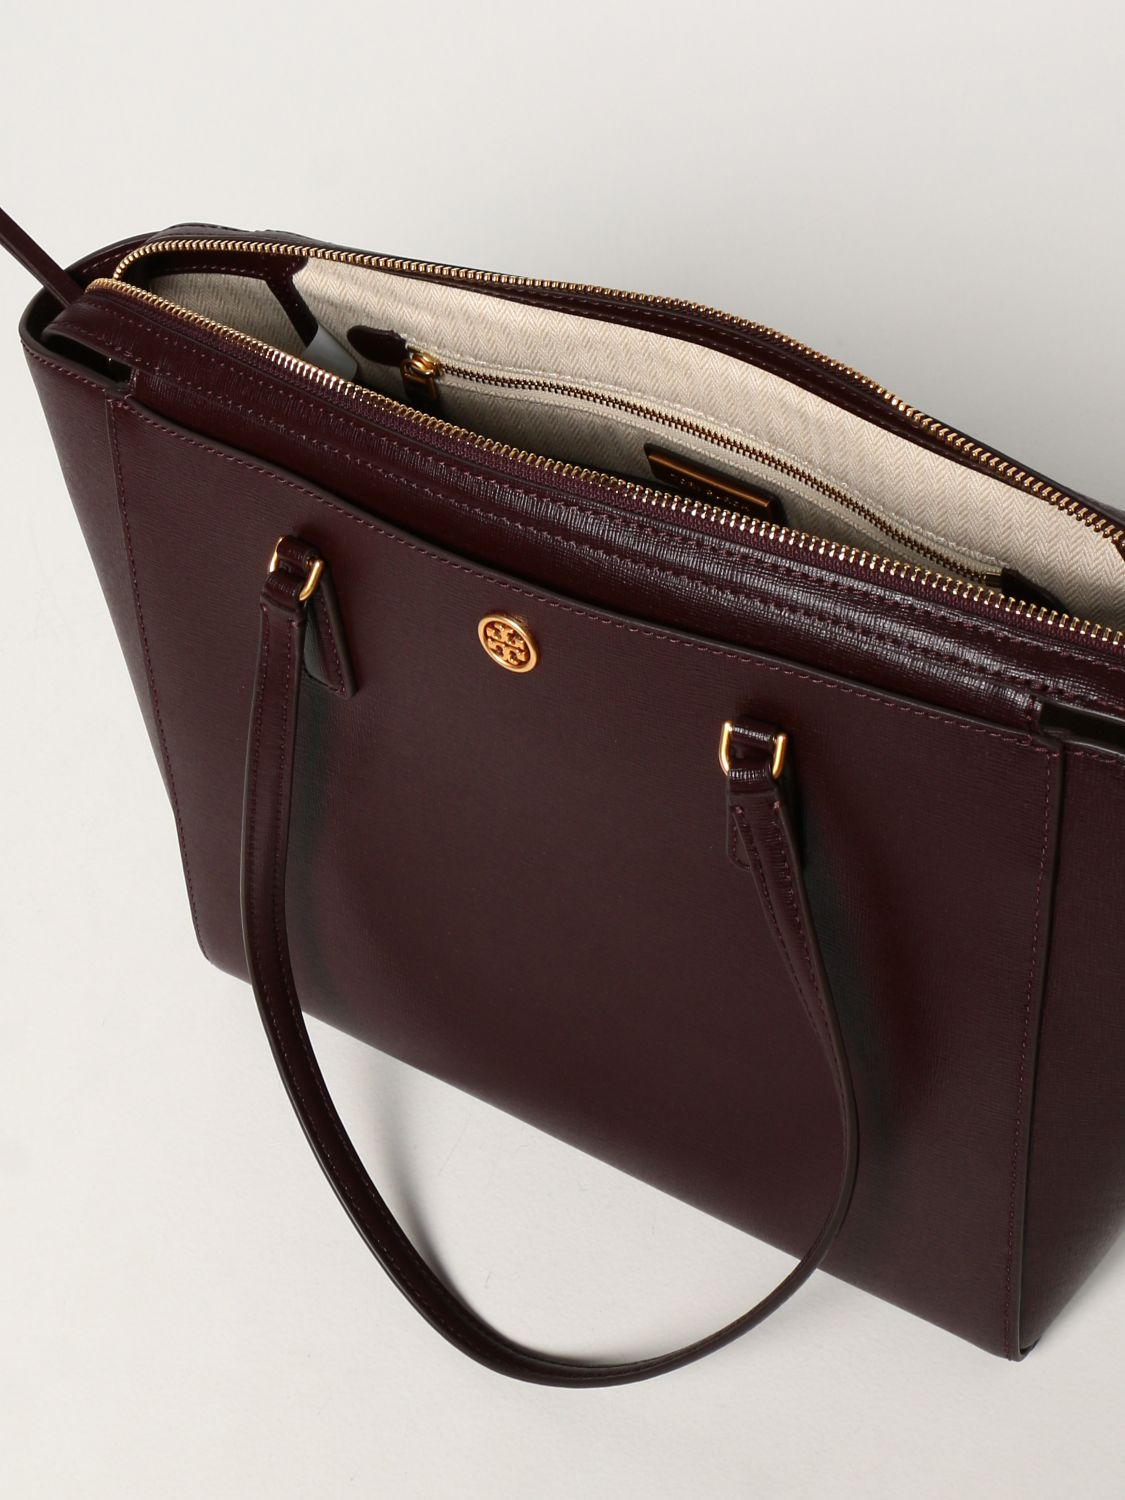 TORY BURCH: Robinson bag in saffiano leather - Burgundy